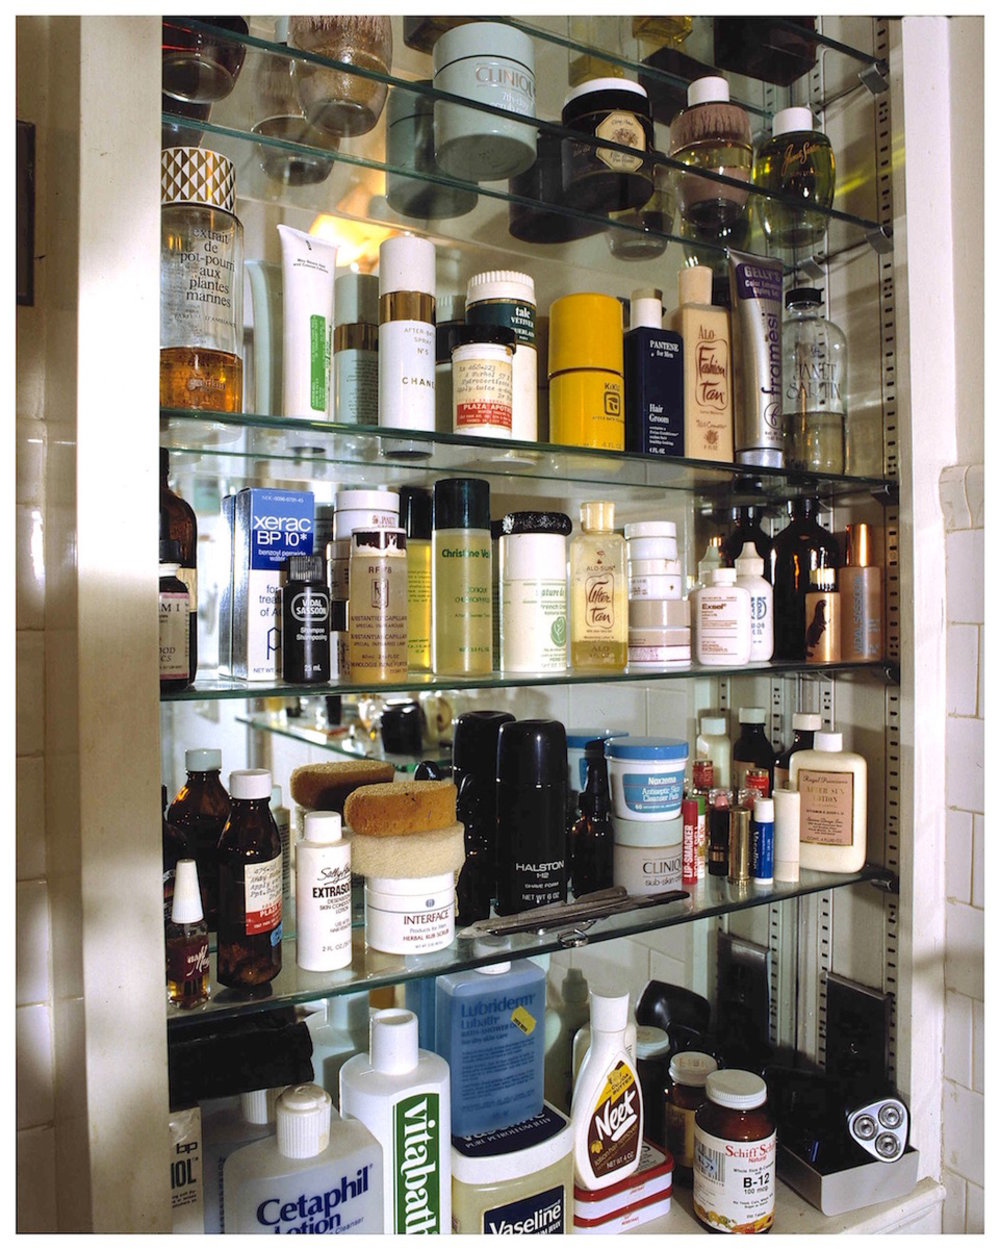 Andy Warhol’s Medicine Cabinet (En suite) East 66th Street, NYC, 1987 by David Gamble